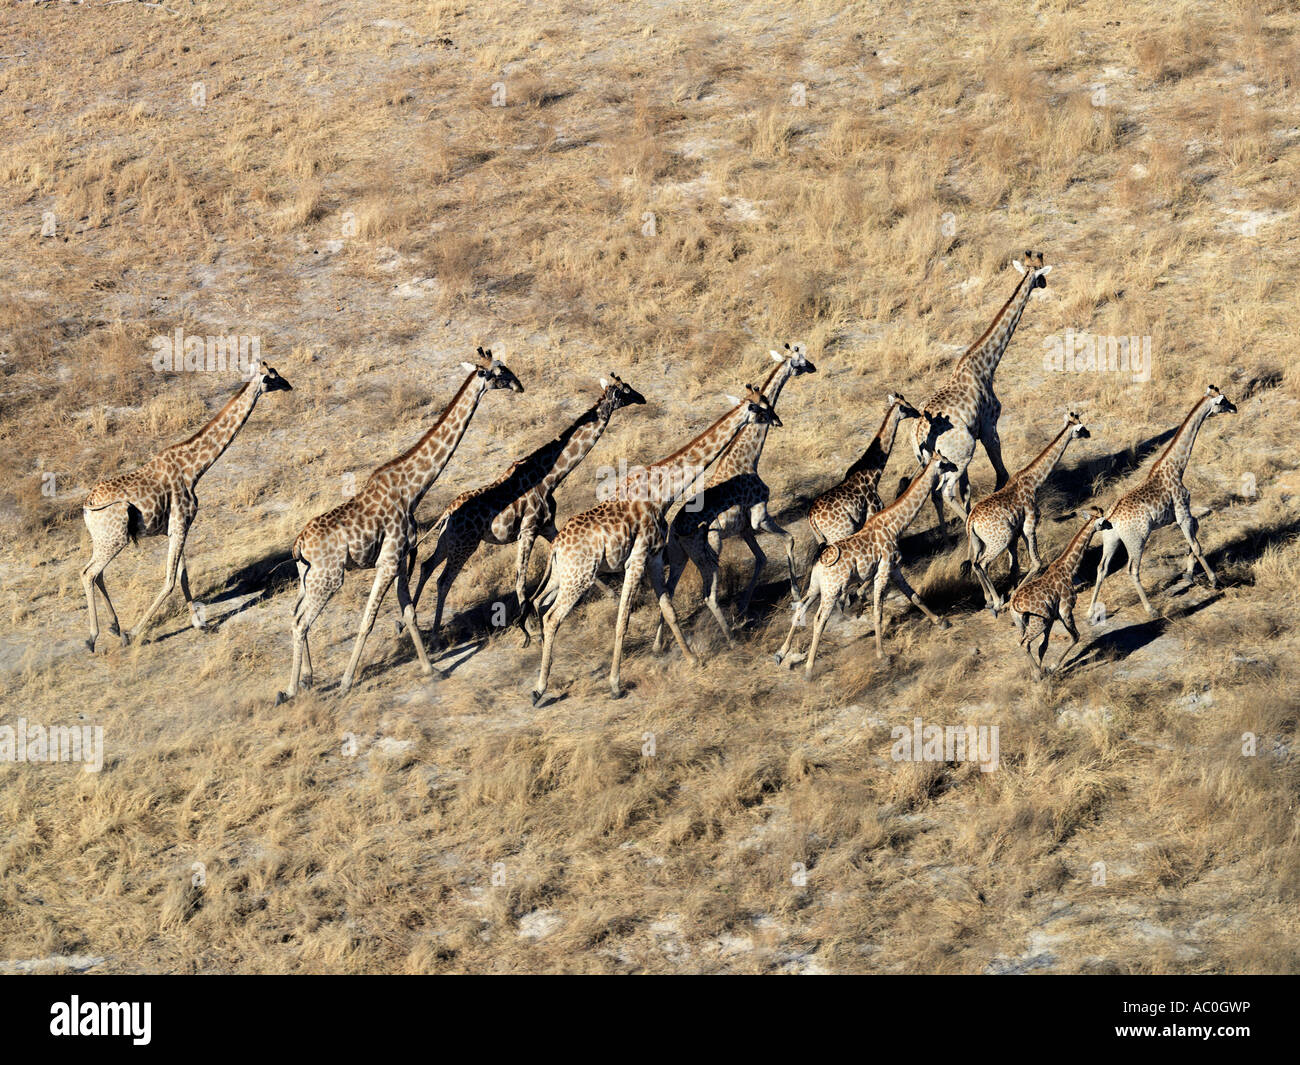 A herd of giraffes cross a dry flood plain in the Okavango Delta Stock Photo